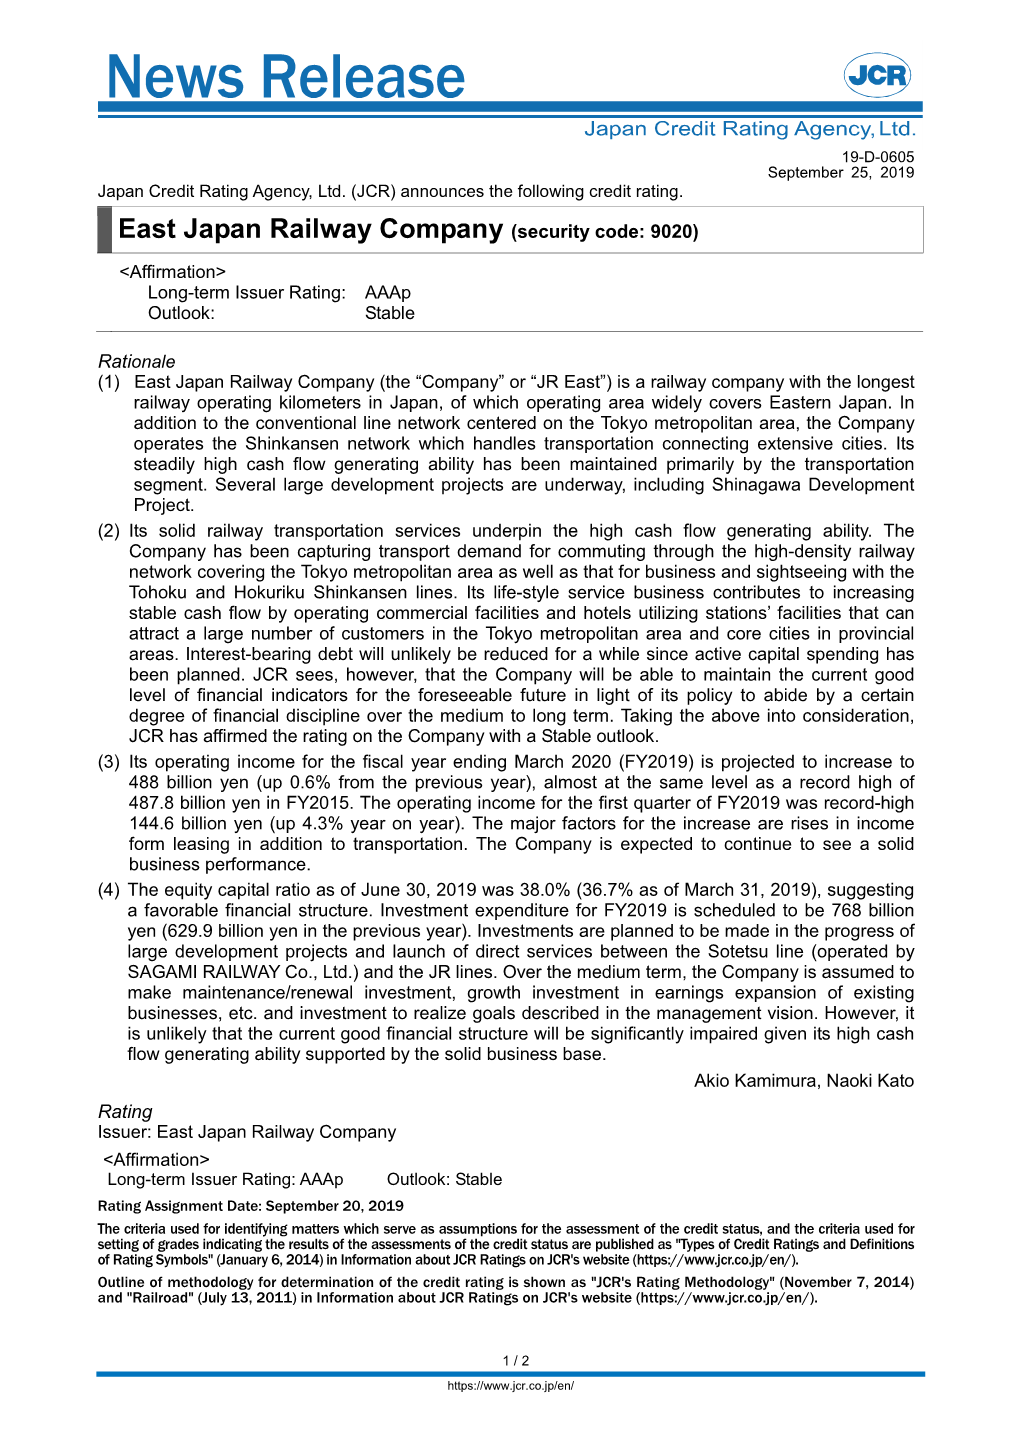 East Japan Railway Company (Security Code: 9020)